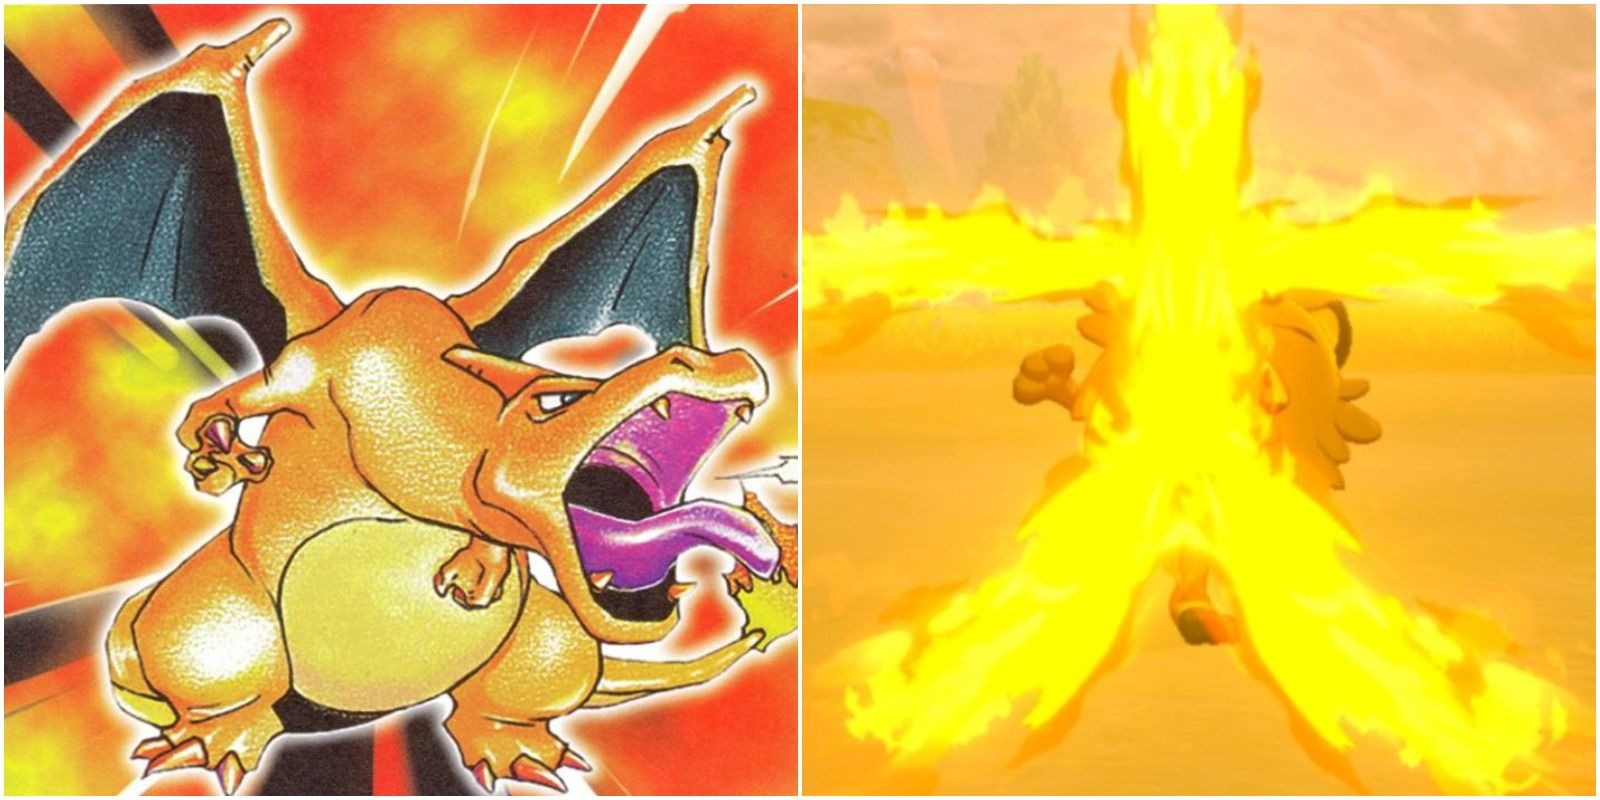 feature image pokemon stab guide charizard pokemon zard art and fire blast move in pokemon sword and shield